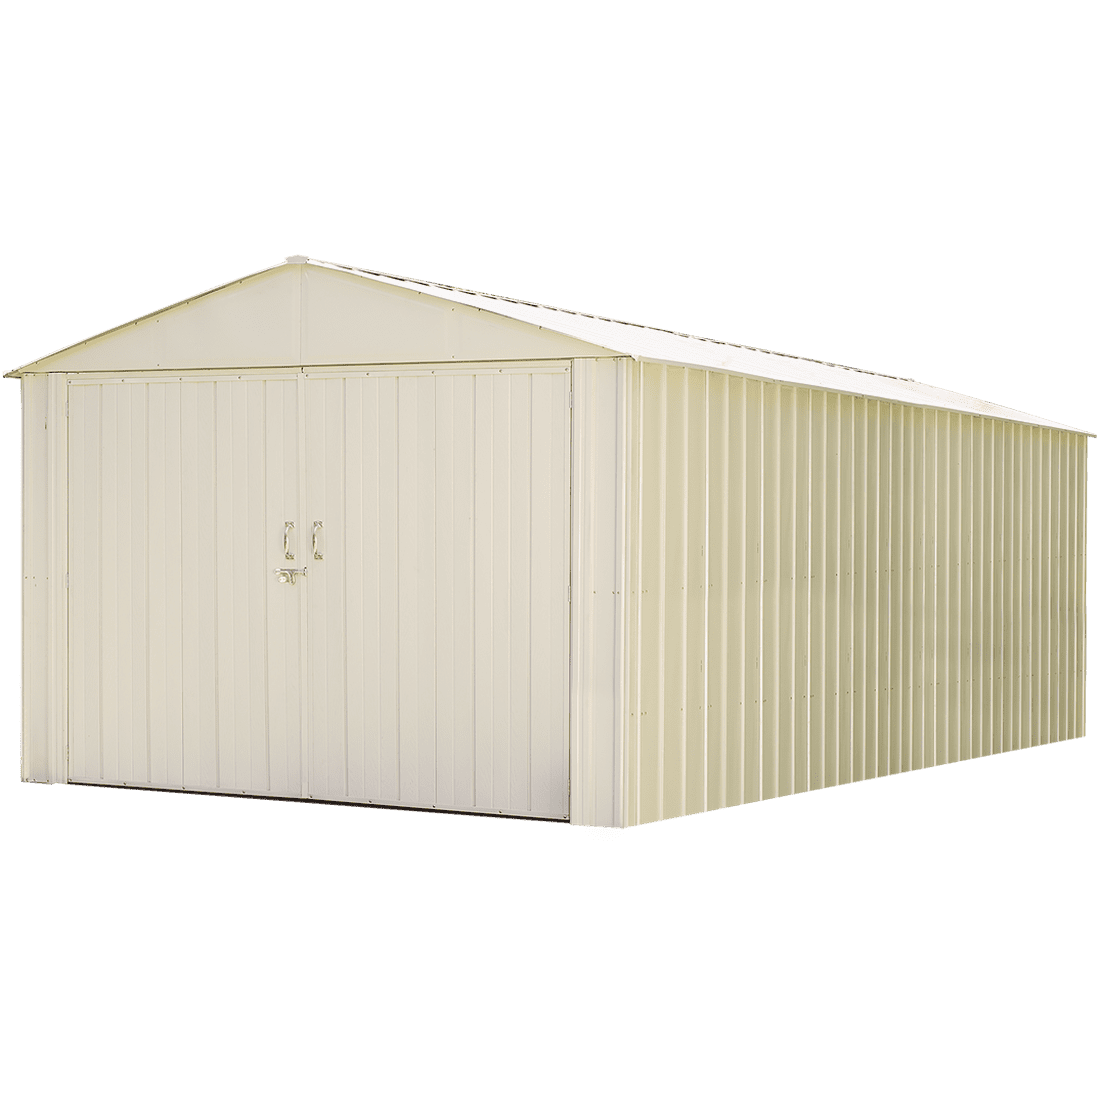 Shelter Logic Arrow Commander Series Storage Building, 10 ft. x 25 ft. x 8 ft. CHD1025